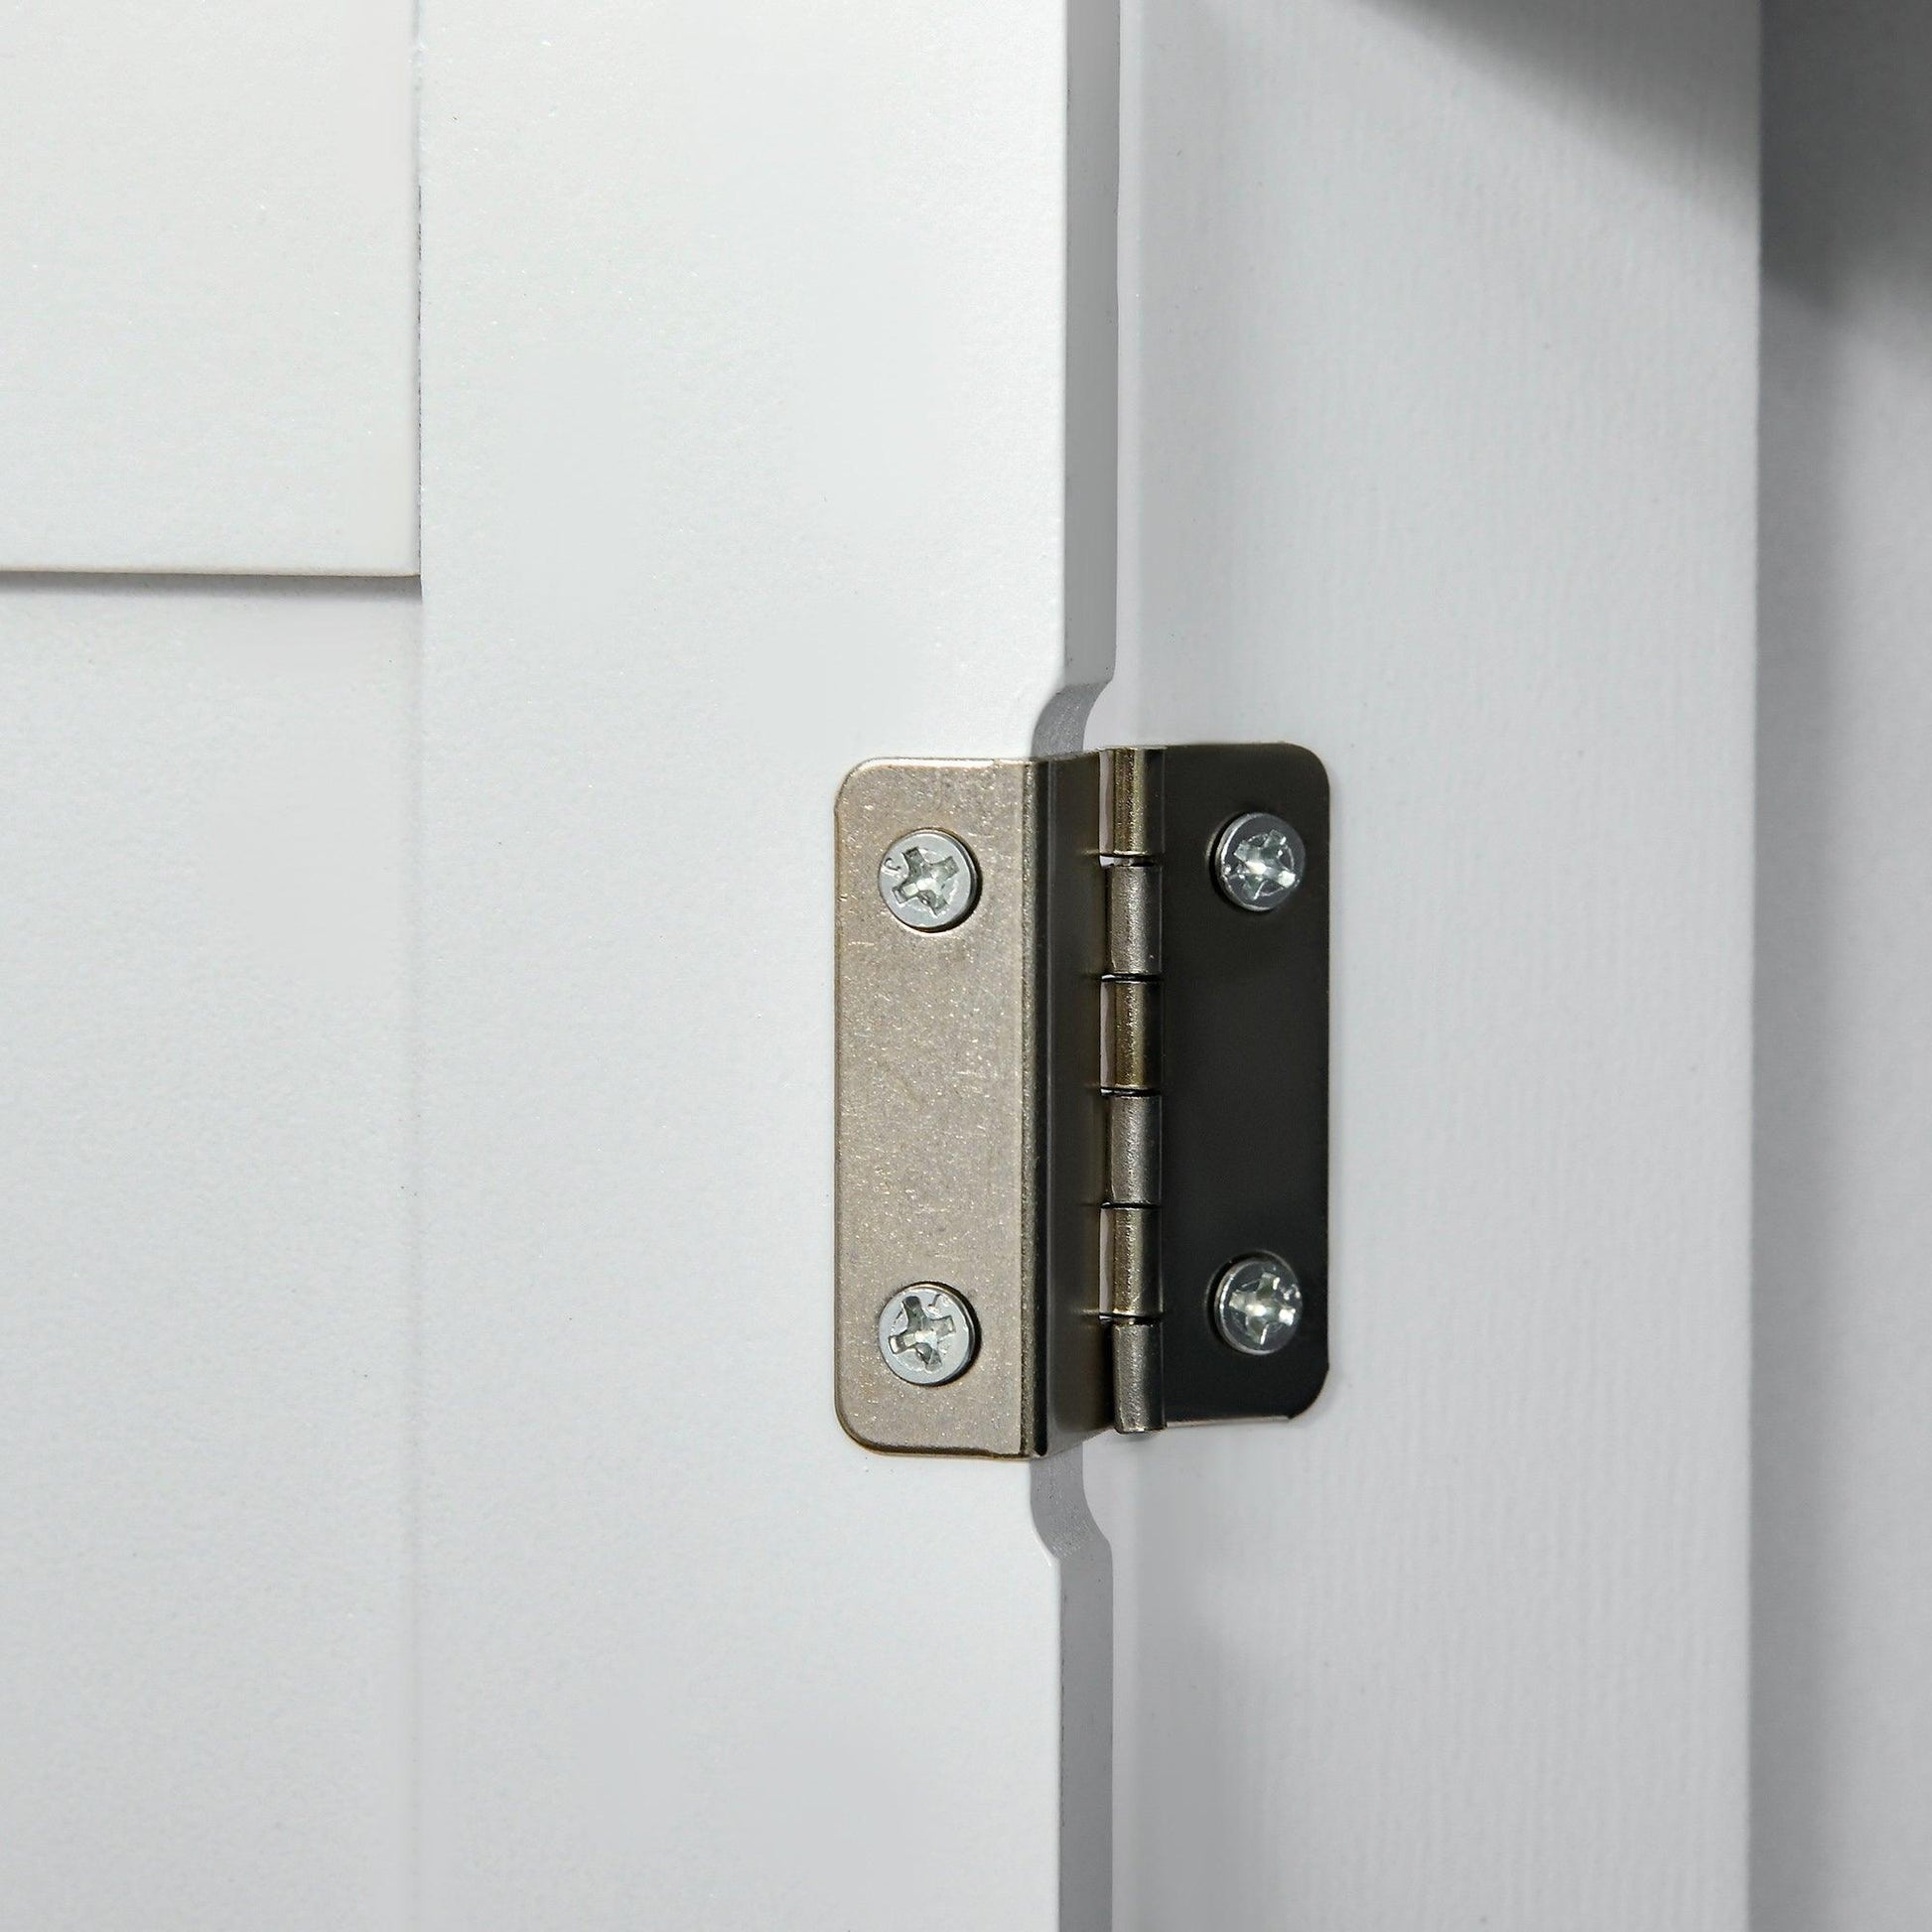 Kleankin Bathroom Storage Cabinet, White, 2 Drawers, Adjustable Shelf - ALL4U RETAILER LTD